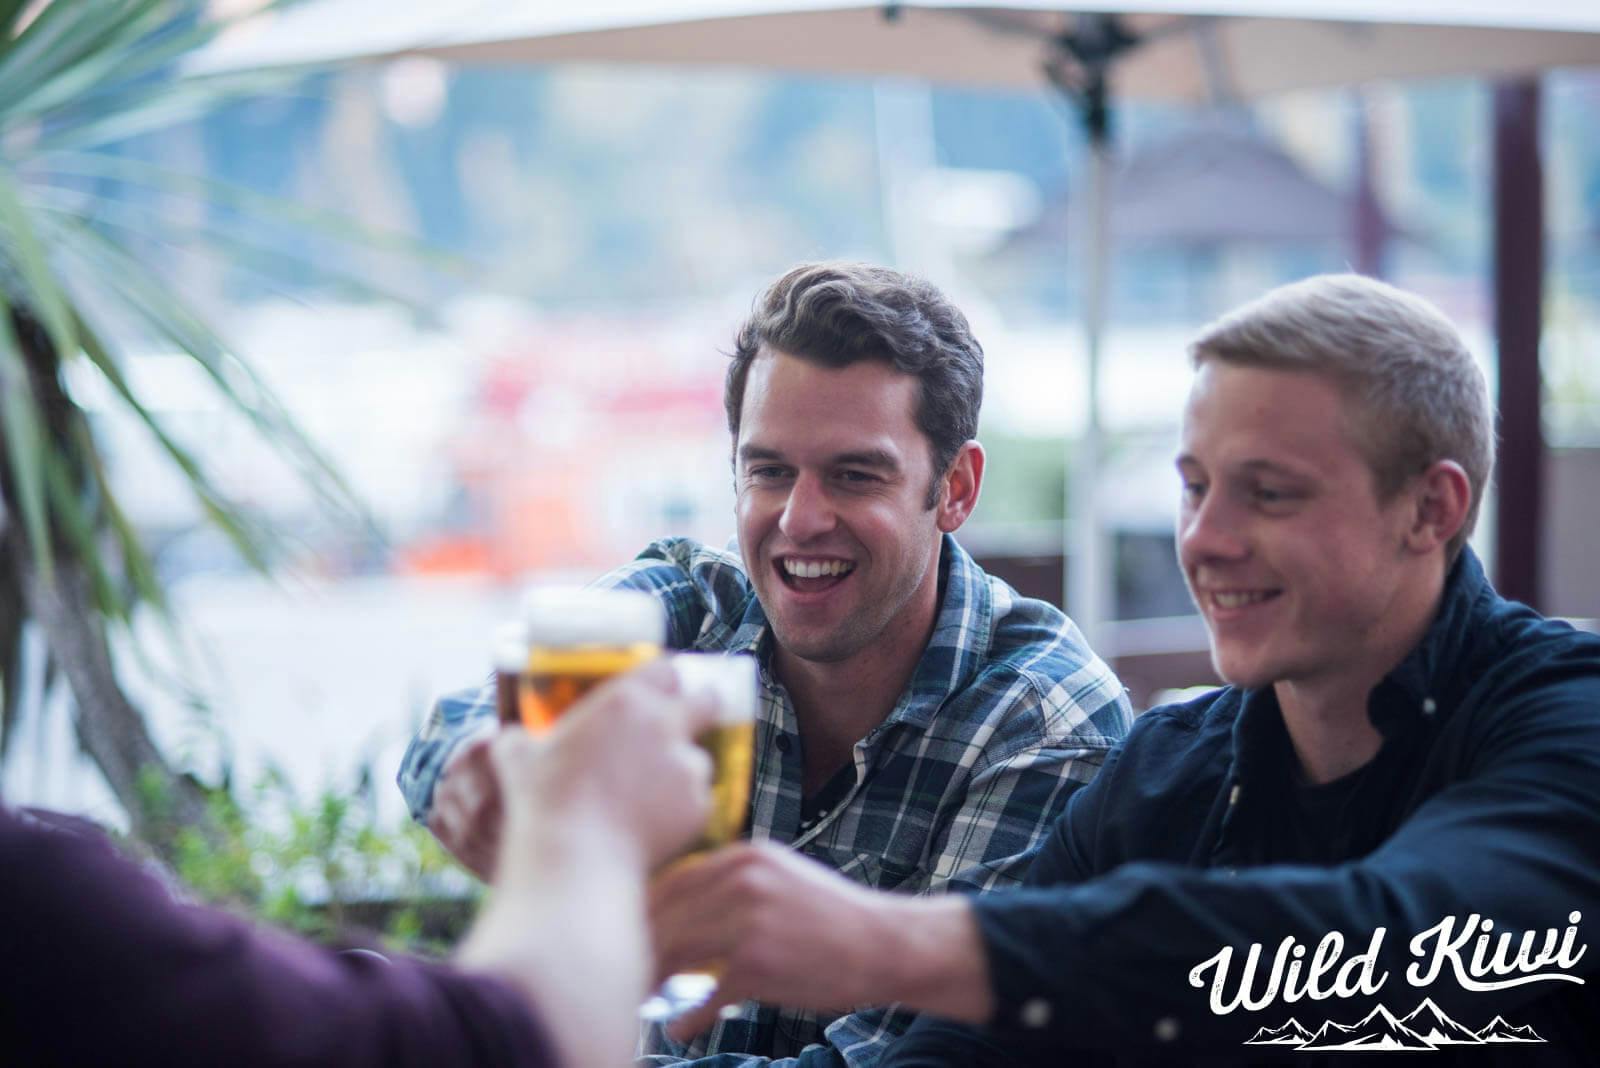 Visit New Zealand on a Wild Kiwi adventure - Meet fun loving local people for drinks